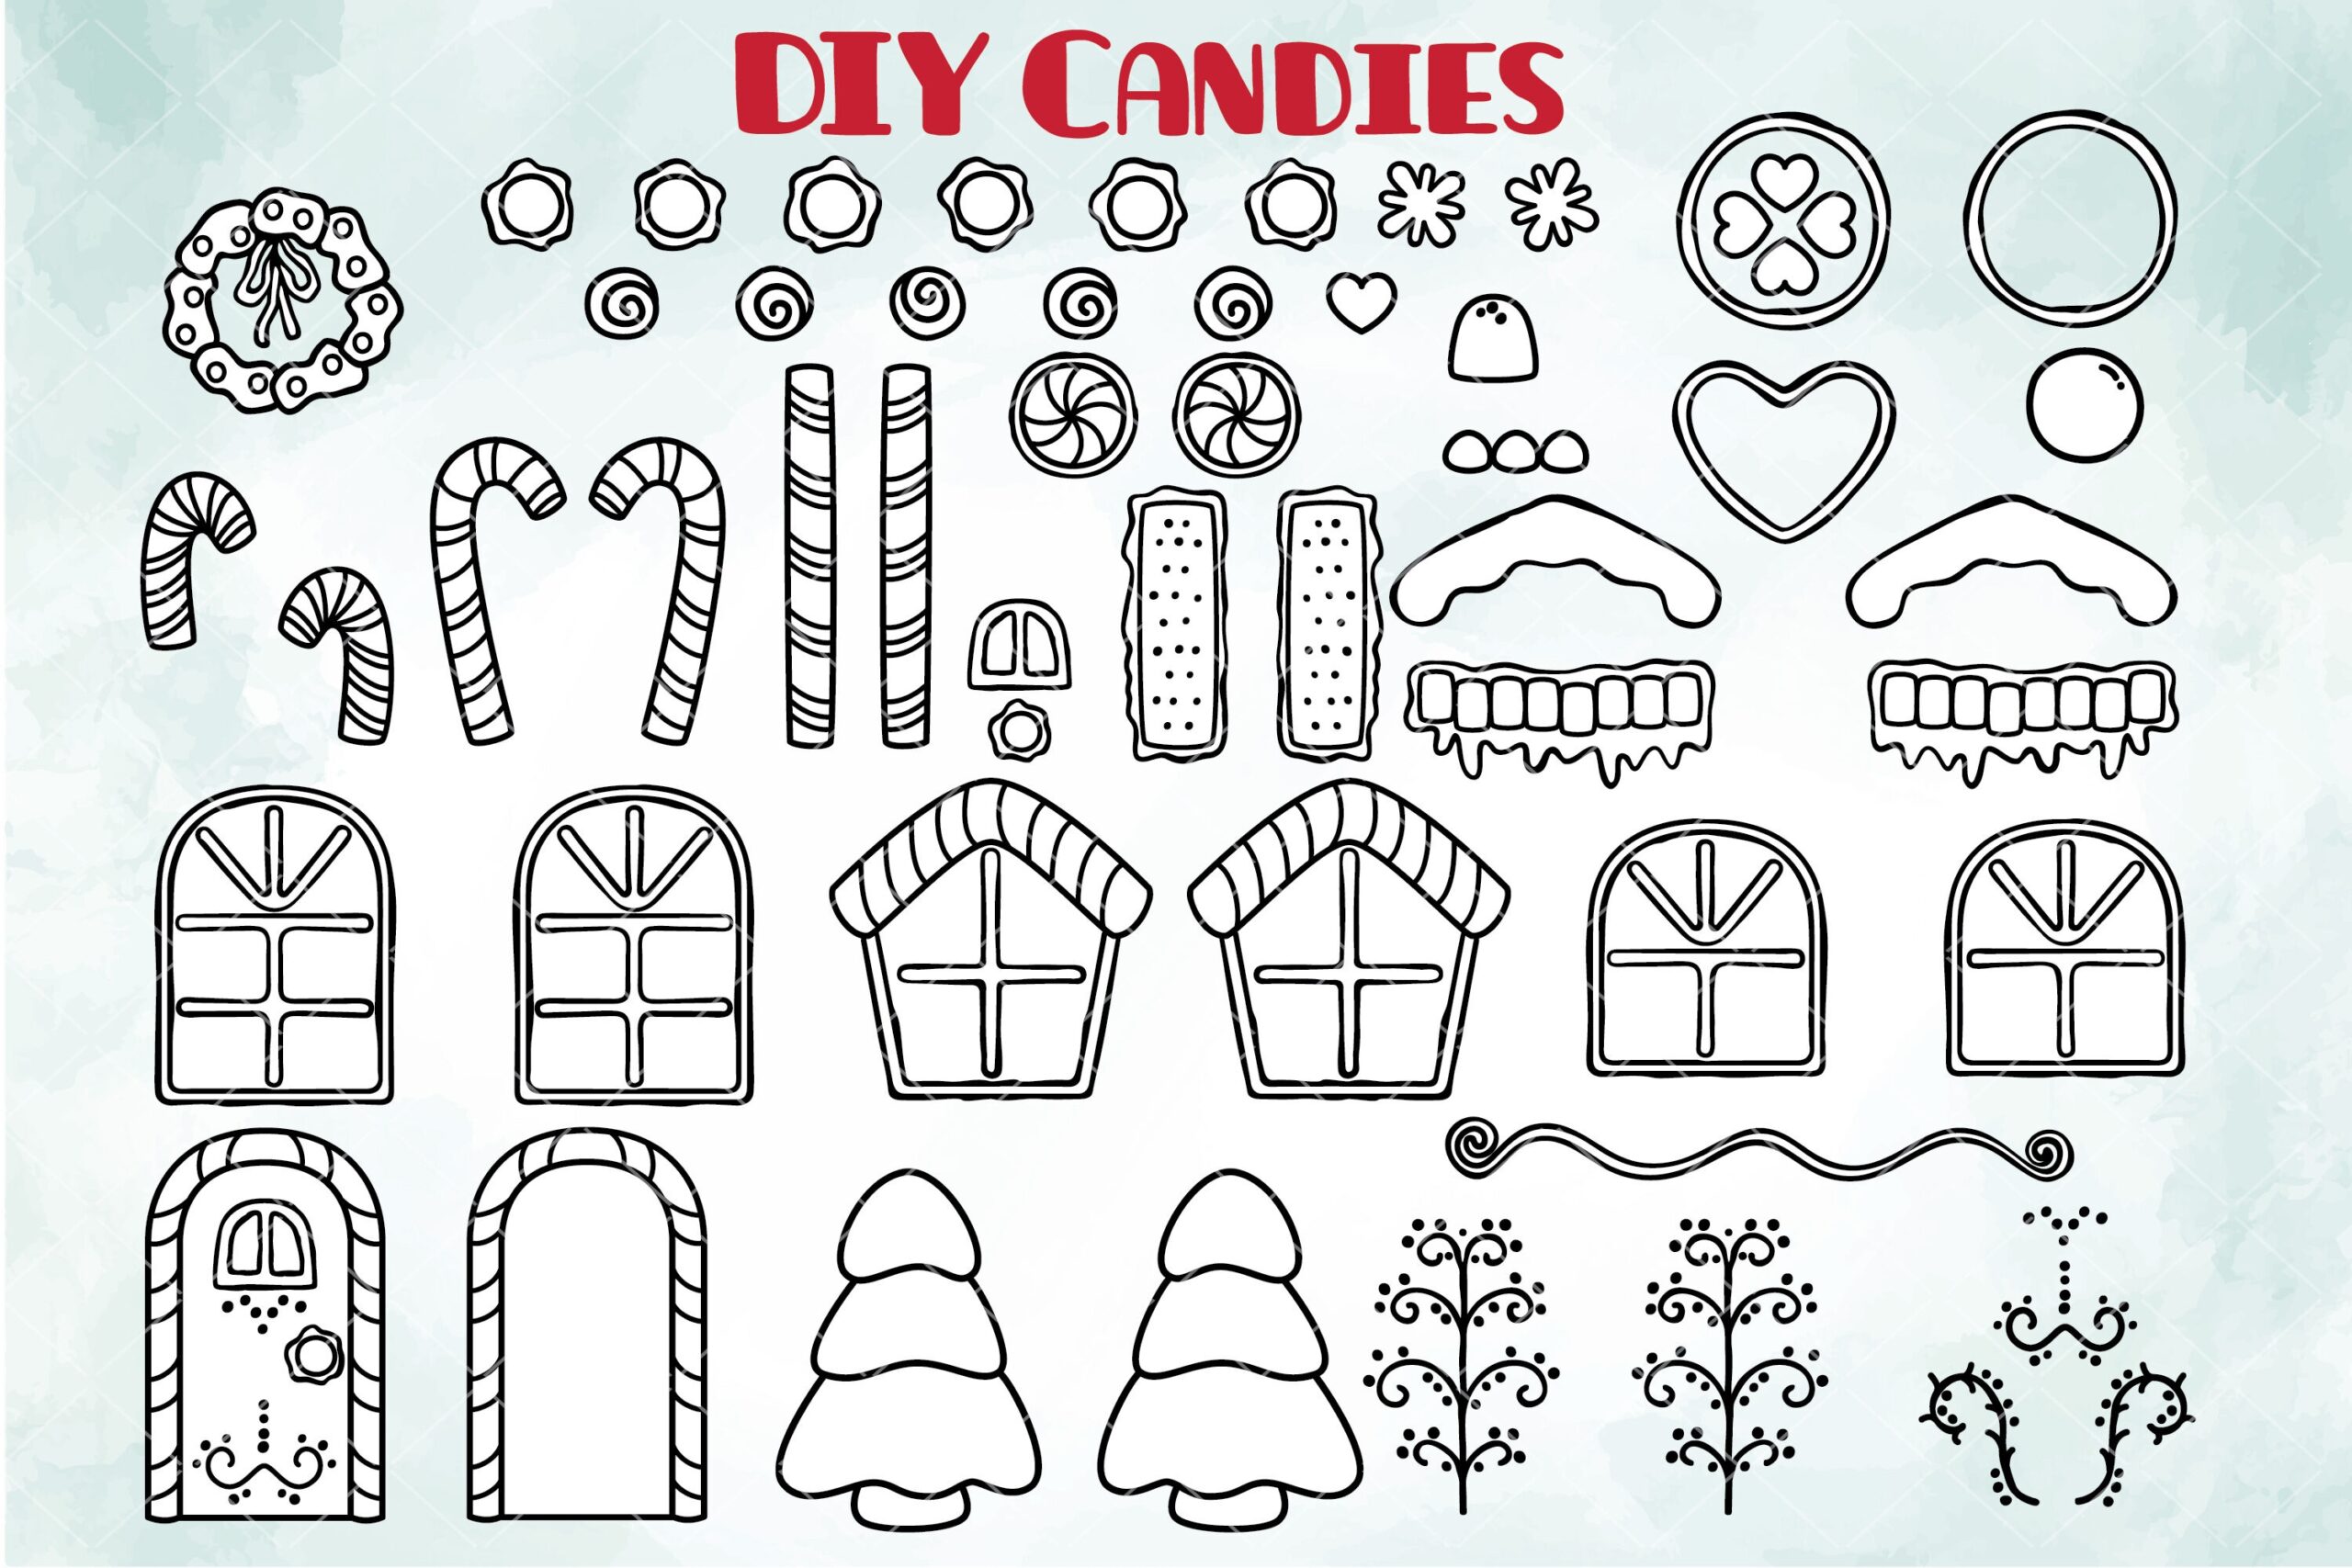 Hand Drawn Gingerbread Cookies DIY Boy Girl Christmas Candy Hous By Digital Draw Studio TheHungryJPEG